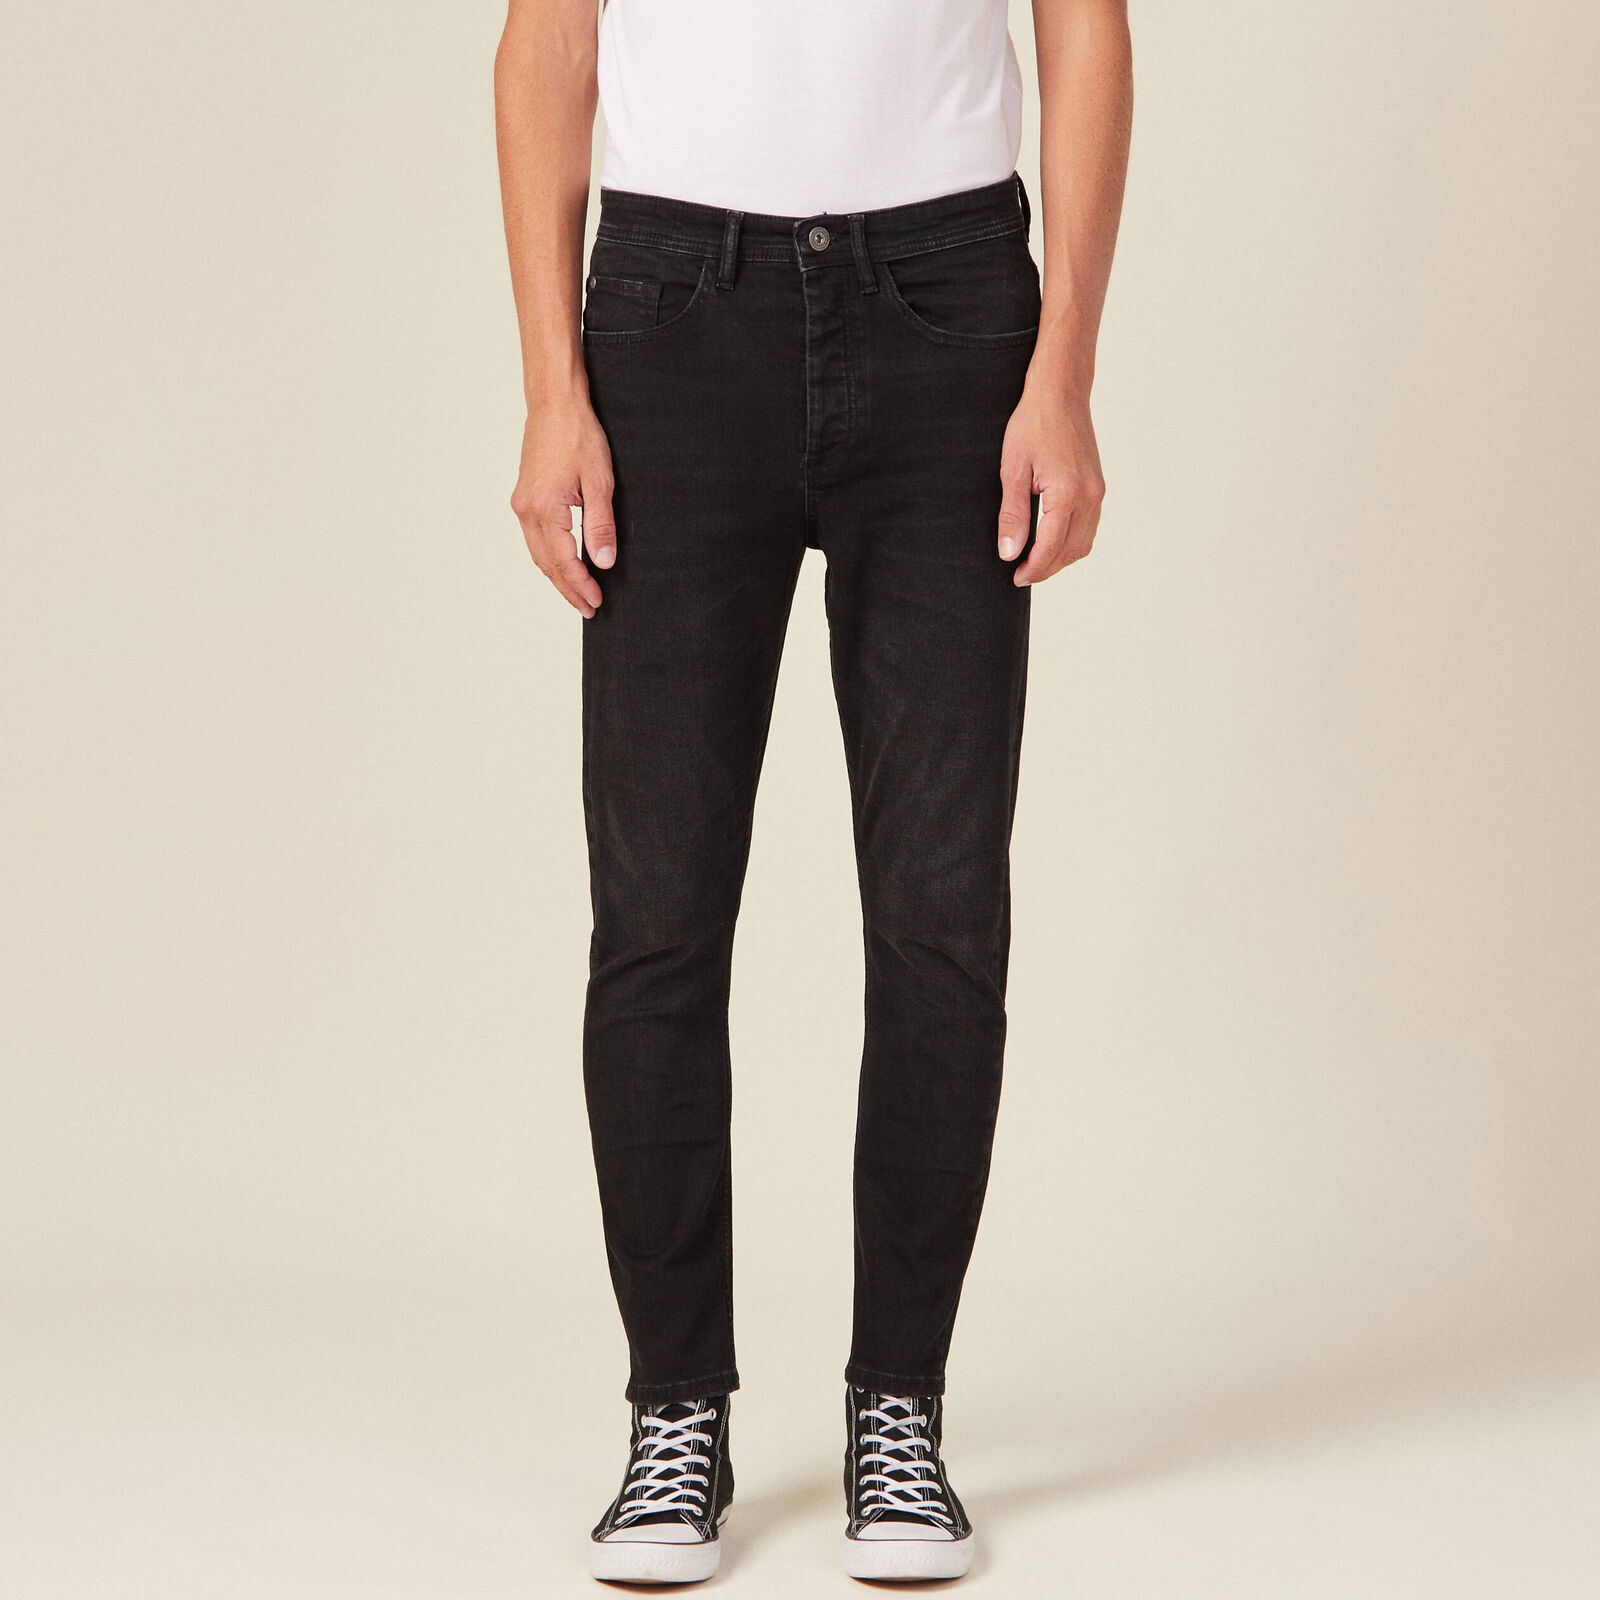 jeans-tapered-5-poches-denim-noir-homme-vue1-36125211151140240